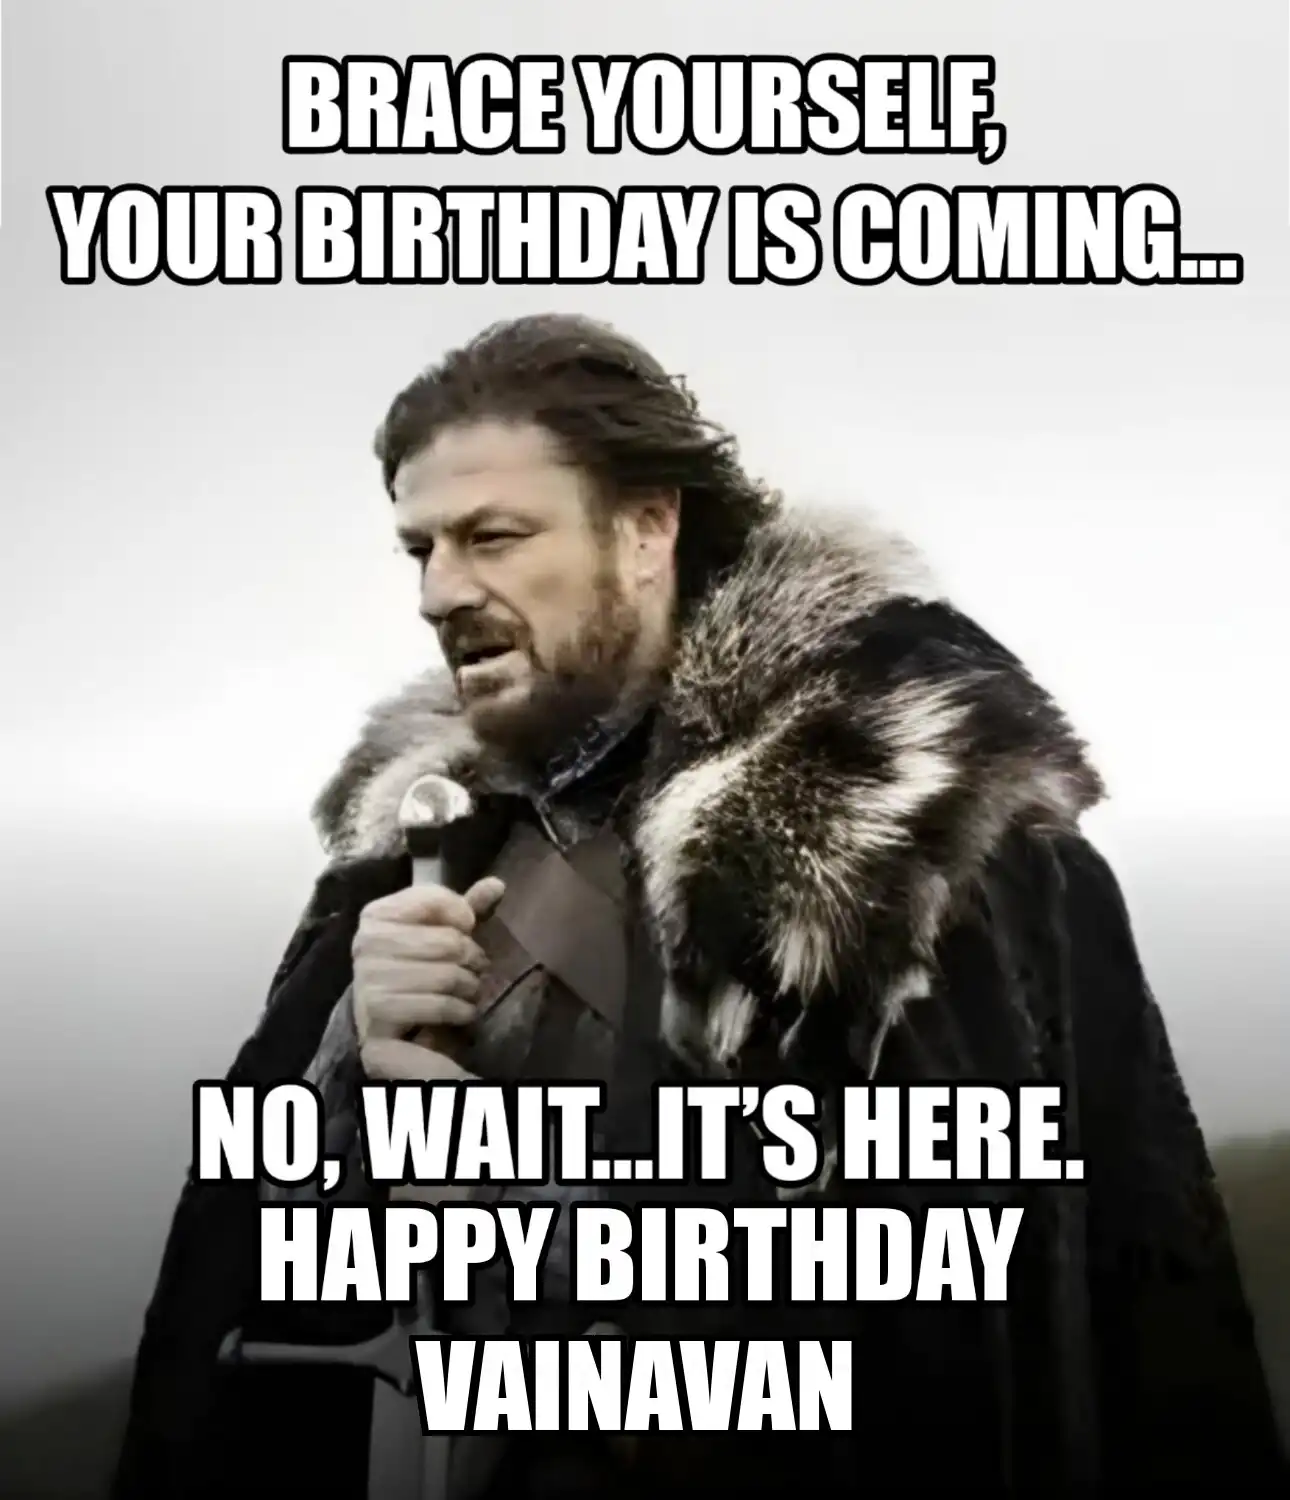 Happy Birthday Vainavan Brace Yourself Your Birthday Is Coming Meme